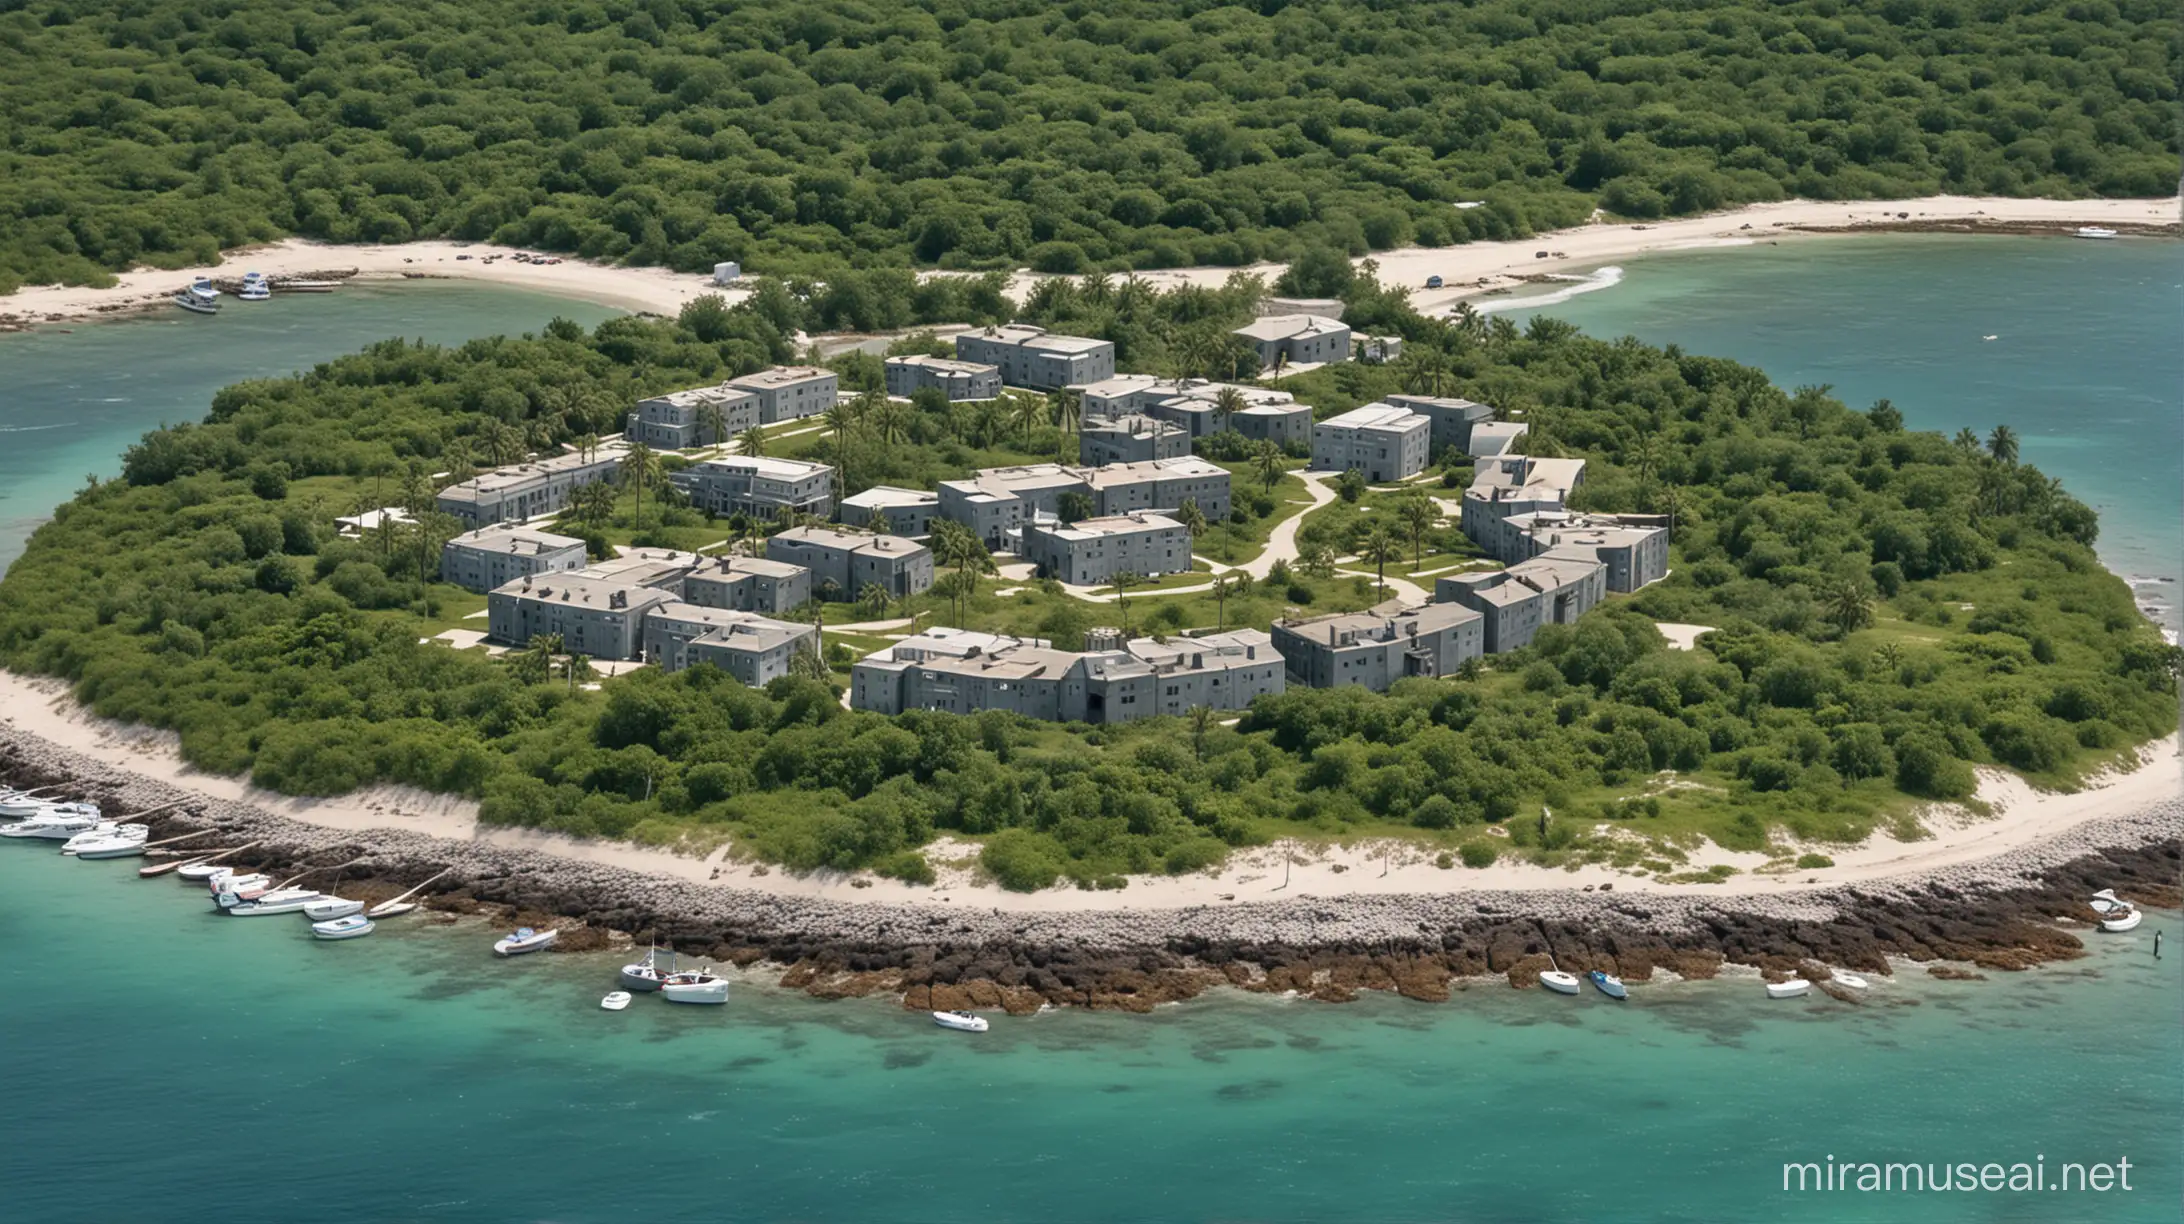 Make little St. James' Island look like a military base.